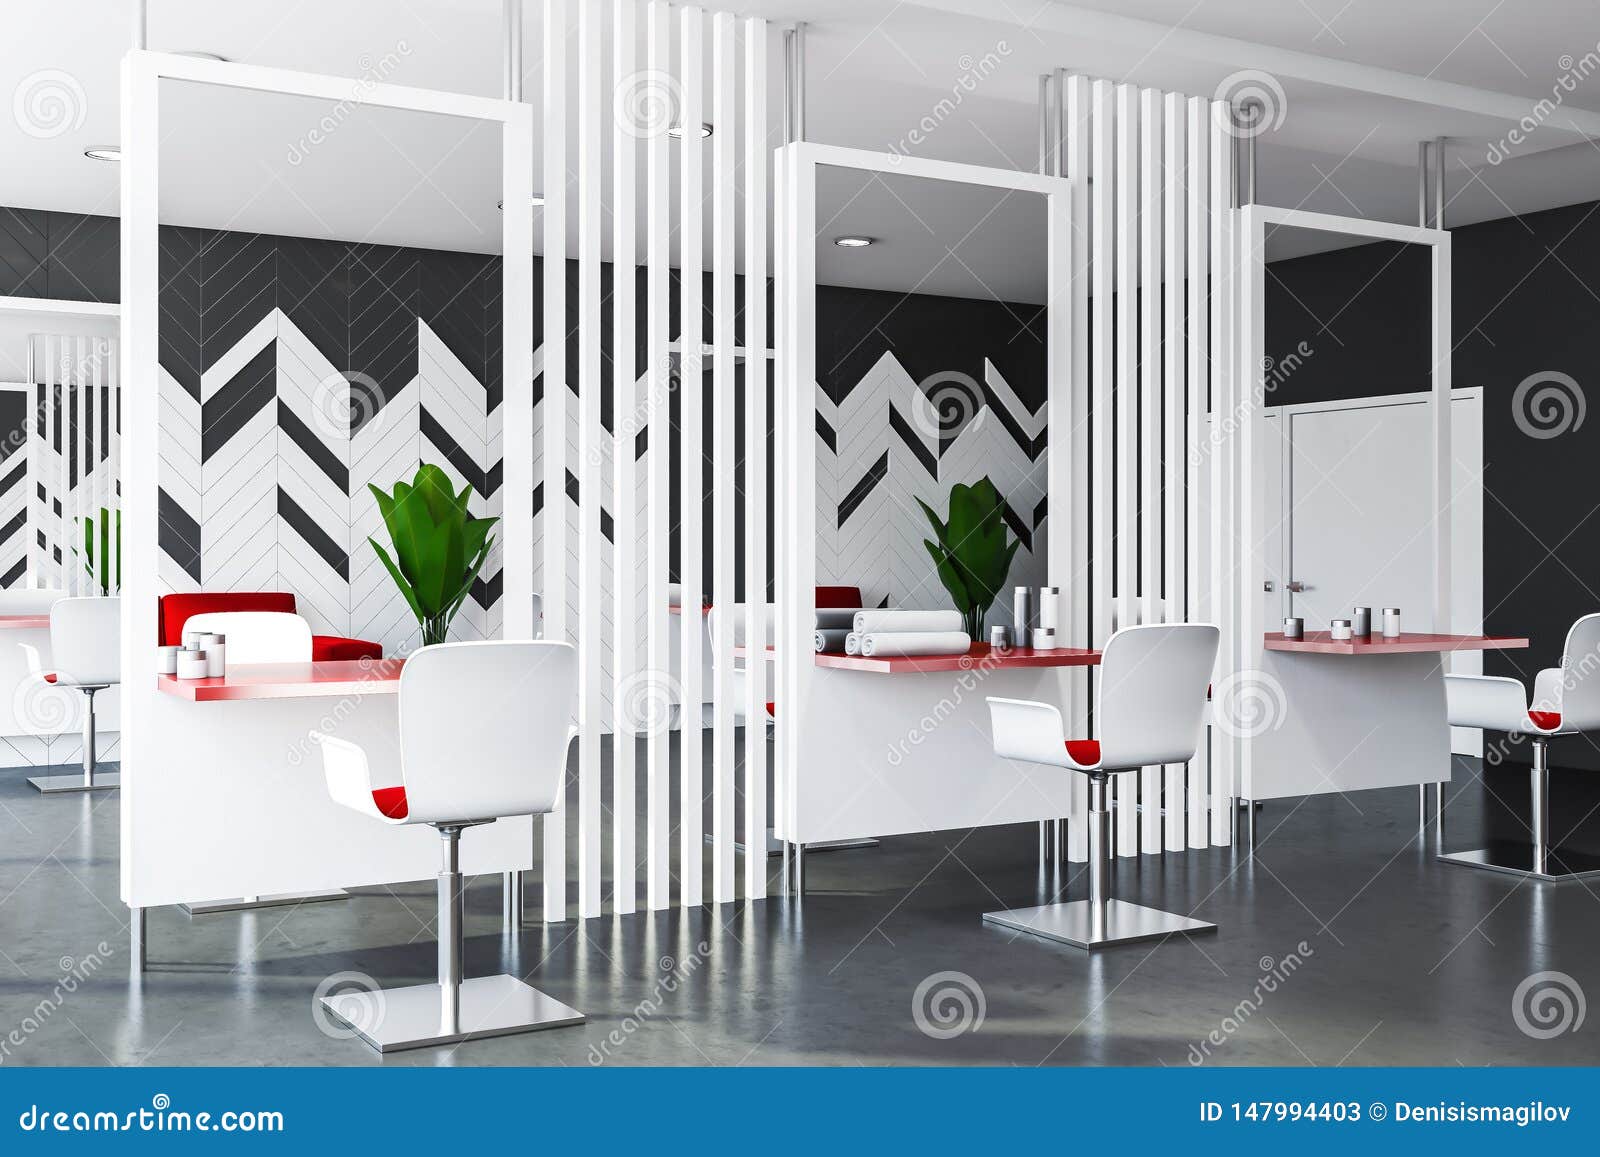 Empty Hairdressing Salon Interior Design Stock Illustration